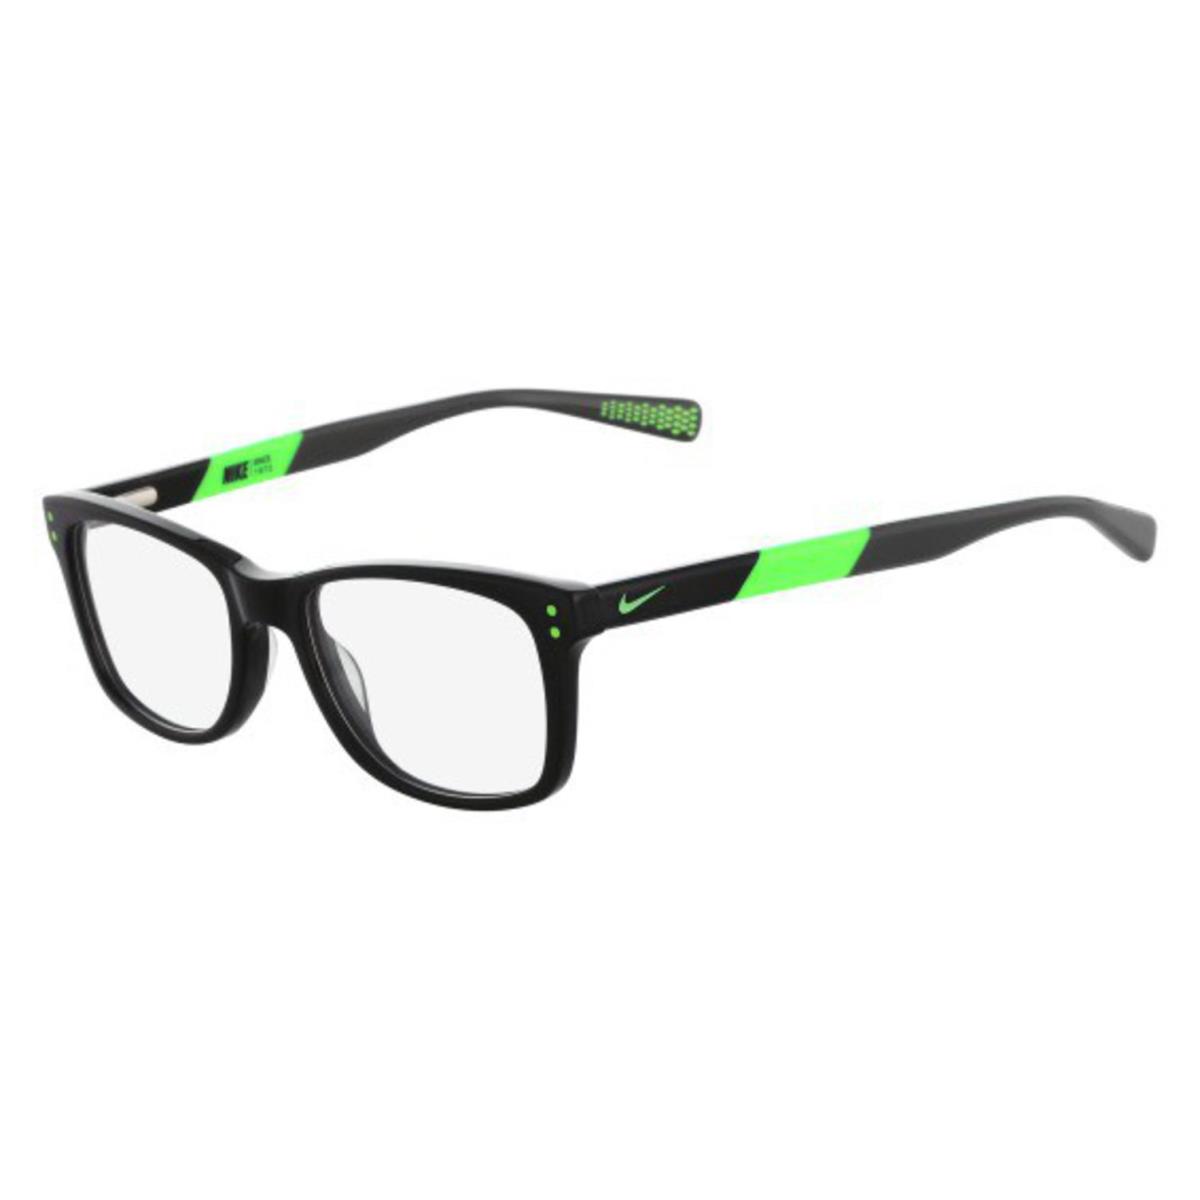 Nike eyeglasses  - Multicolor Frame